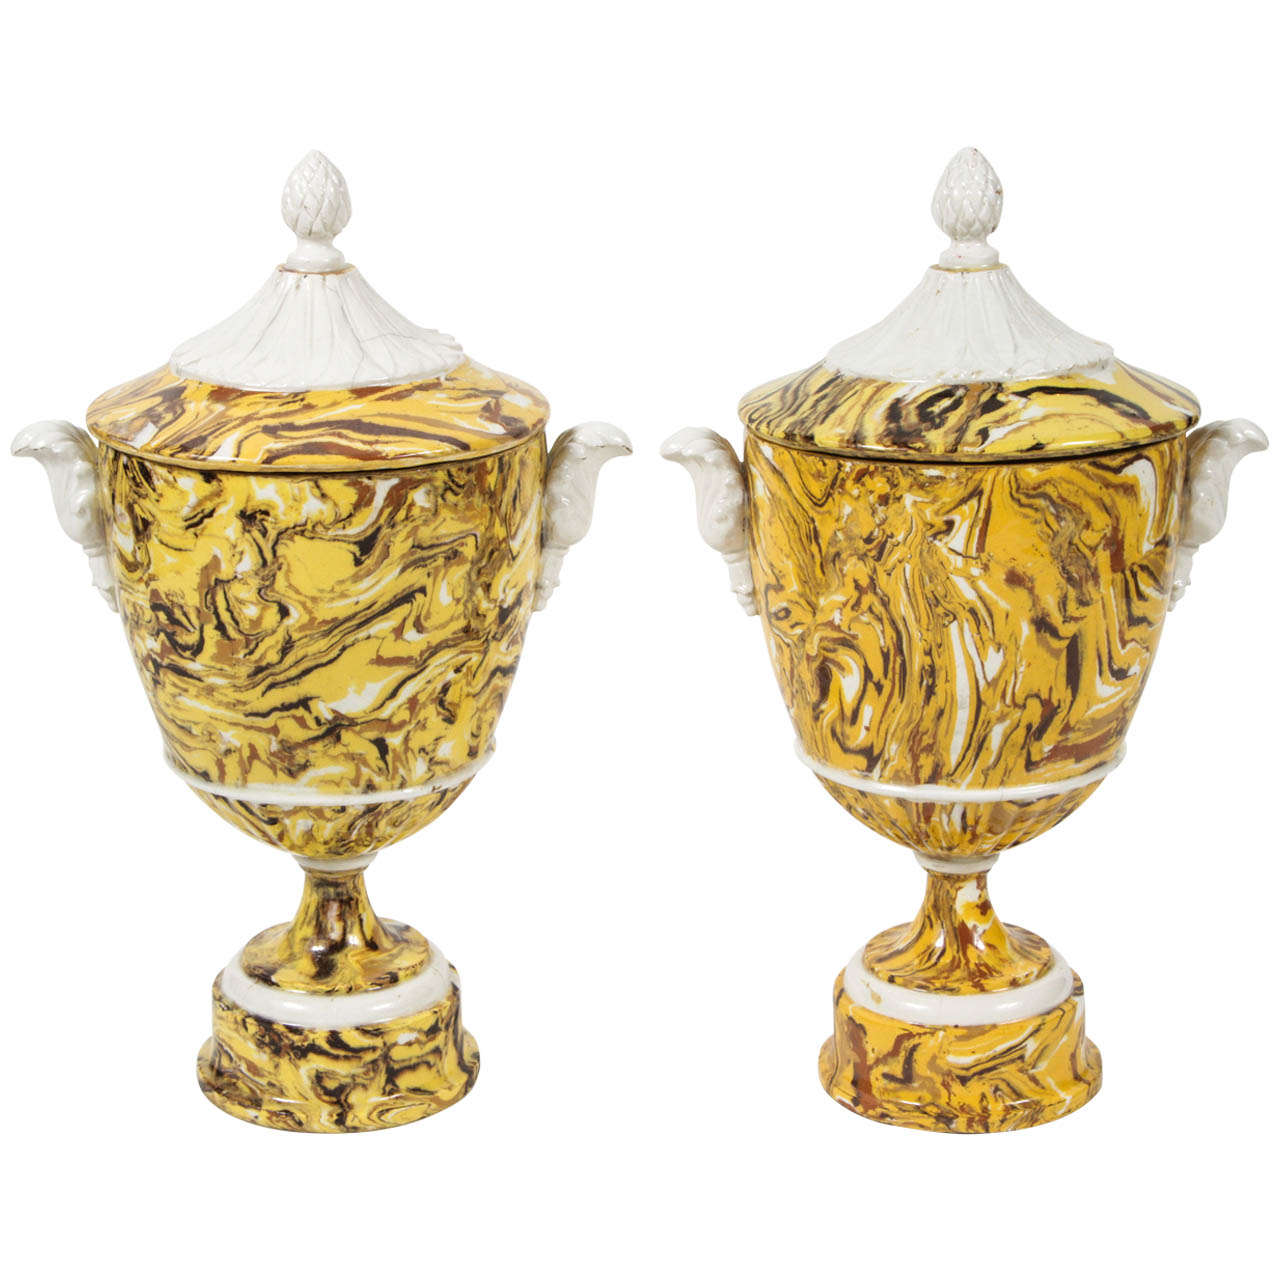 Pair of lidded Terre Melee urns, 19th century